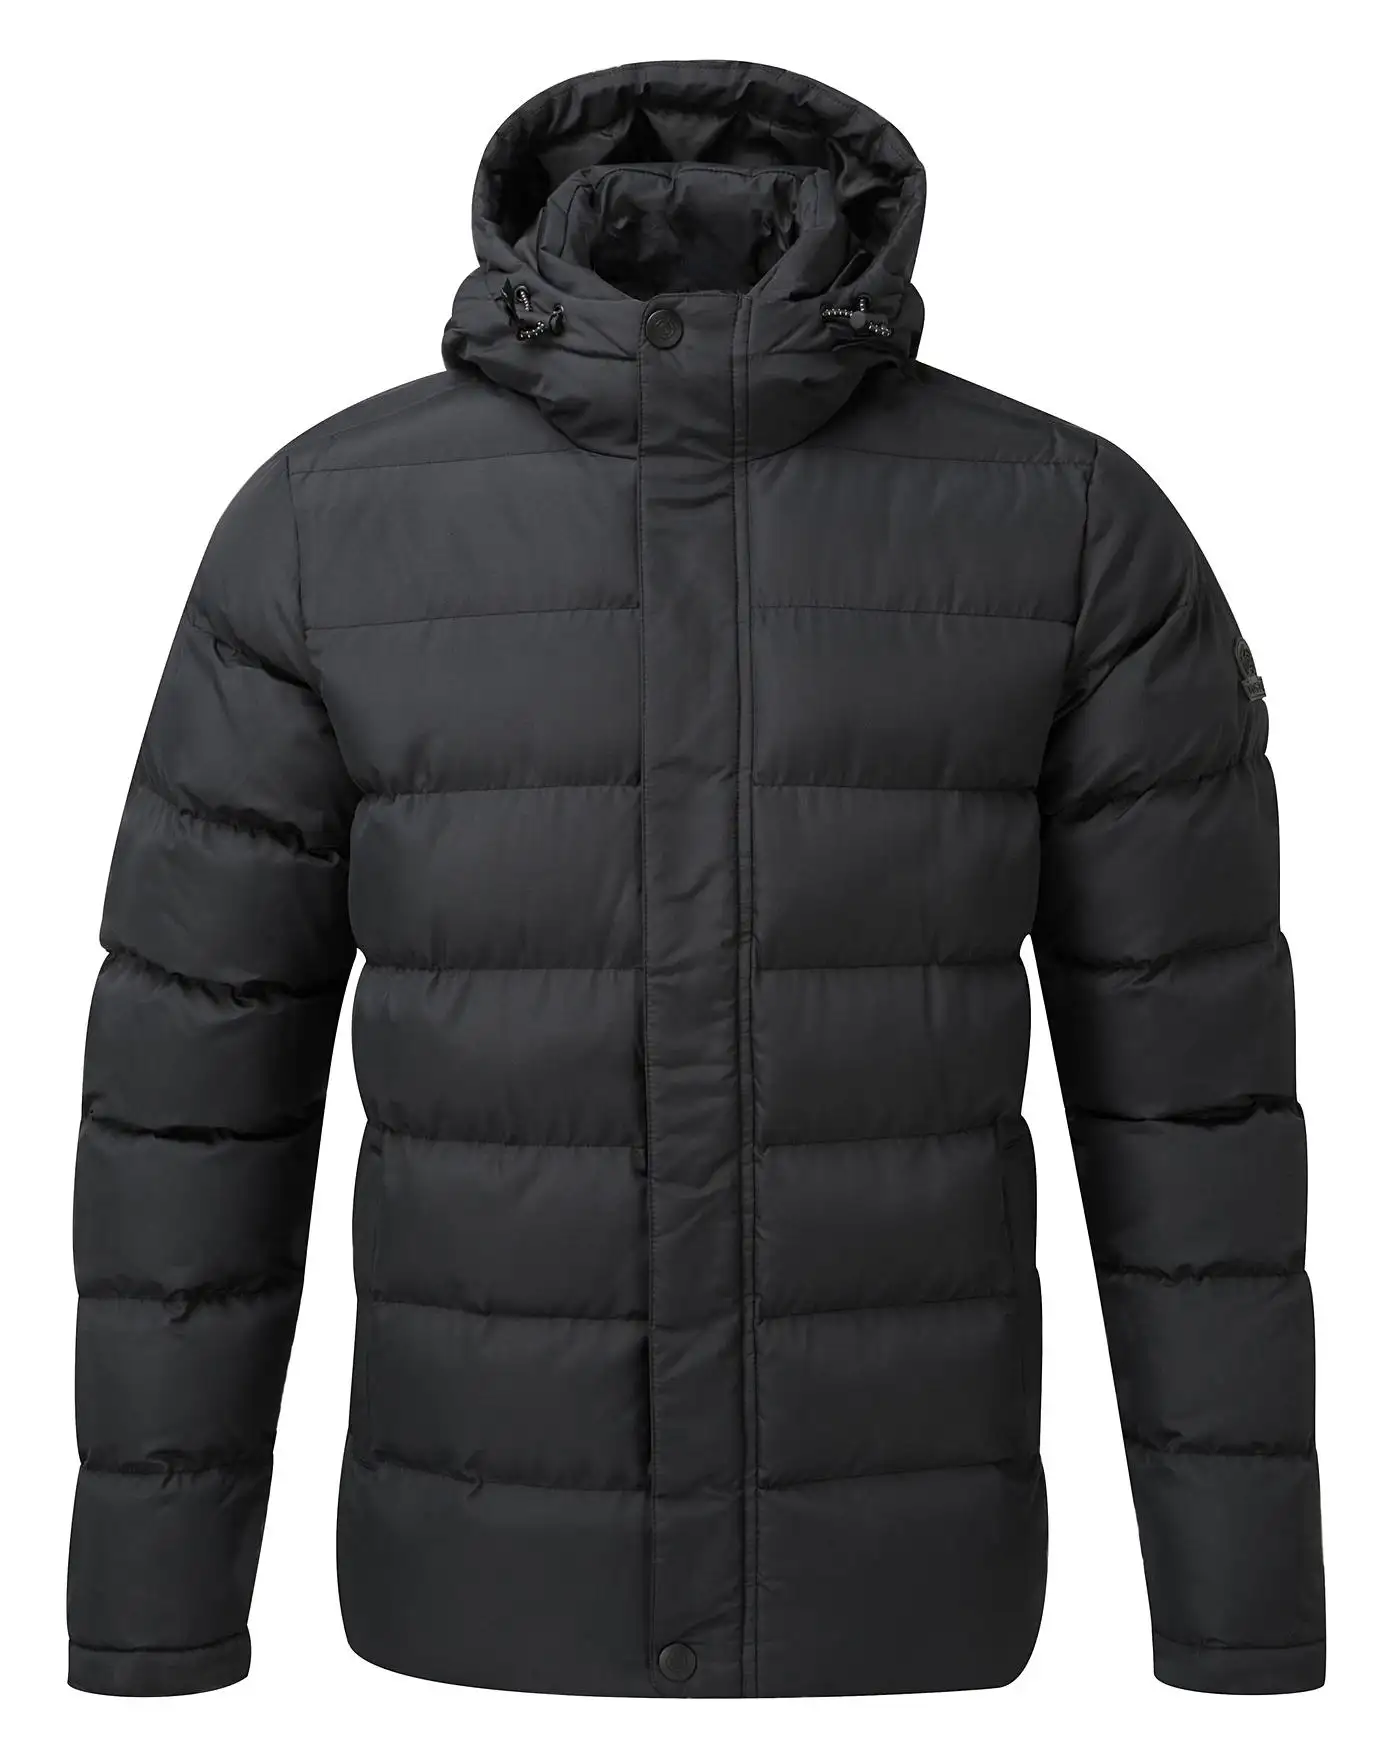 Custom Design Logo Zipper Pockets Men Windproof Coat Removeable Hood Outdoor Jacket Fleece Liner Poly Quilted Lining Inside